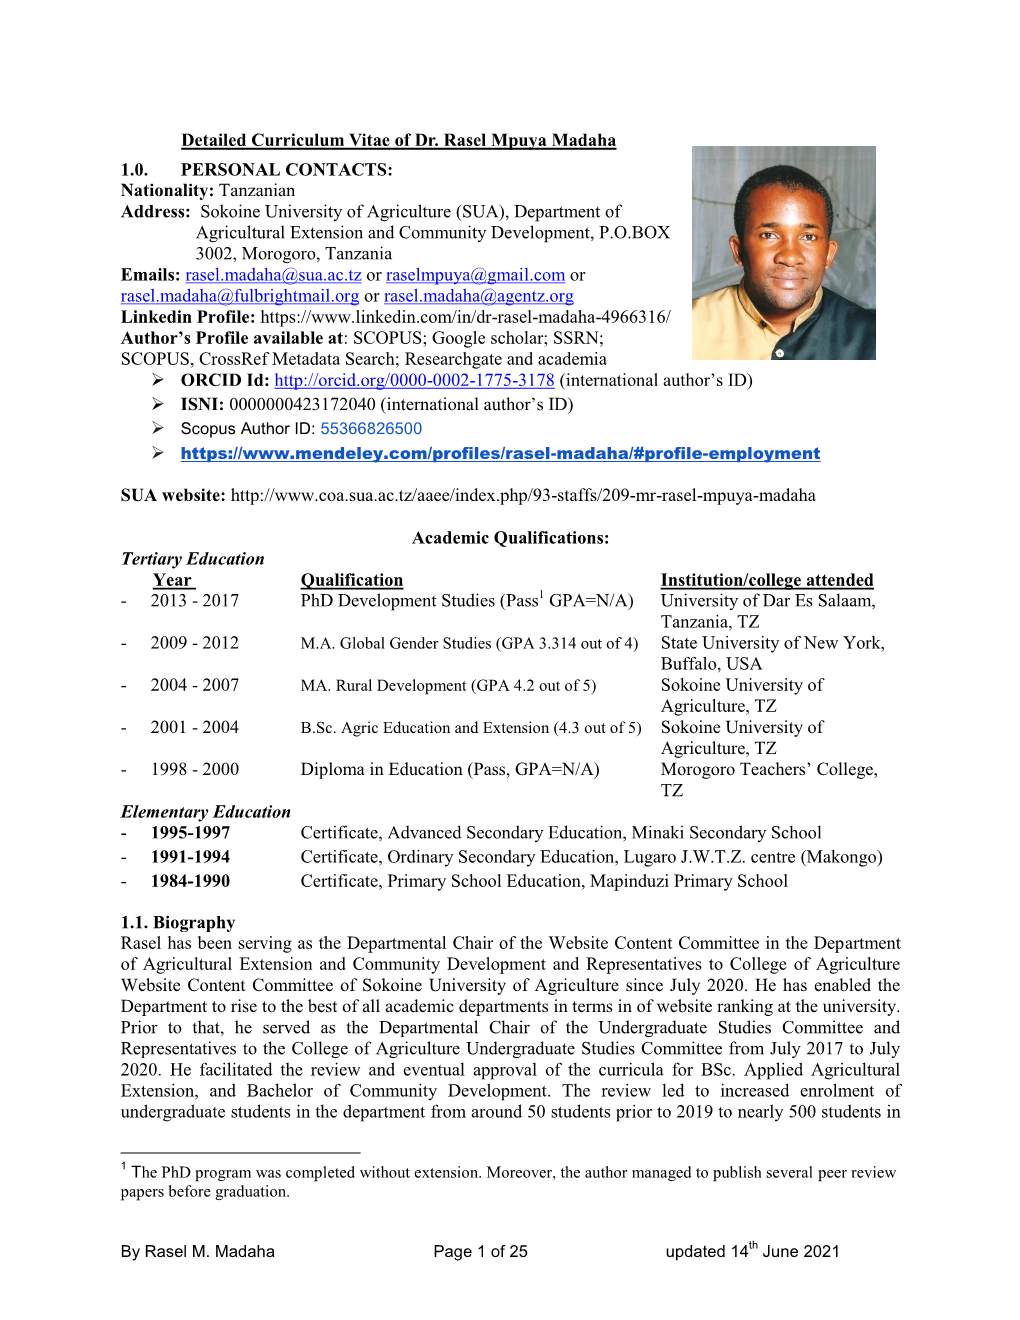 Detailed Curriculum Vitae of Dr. Rasel Mpuya Madaha 1.0